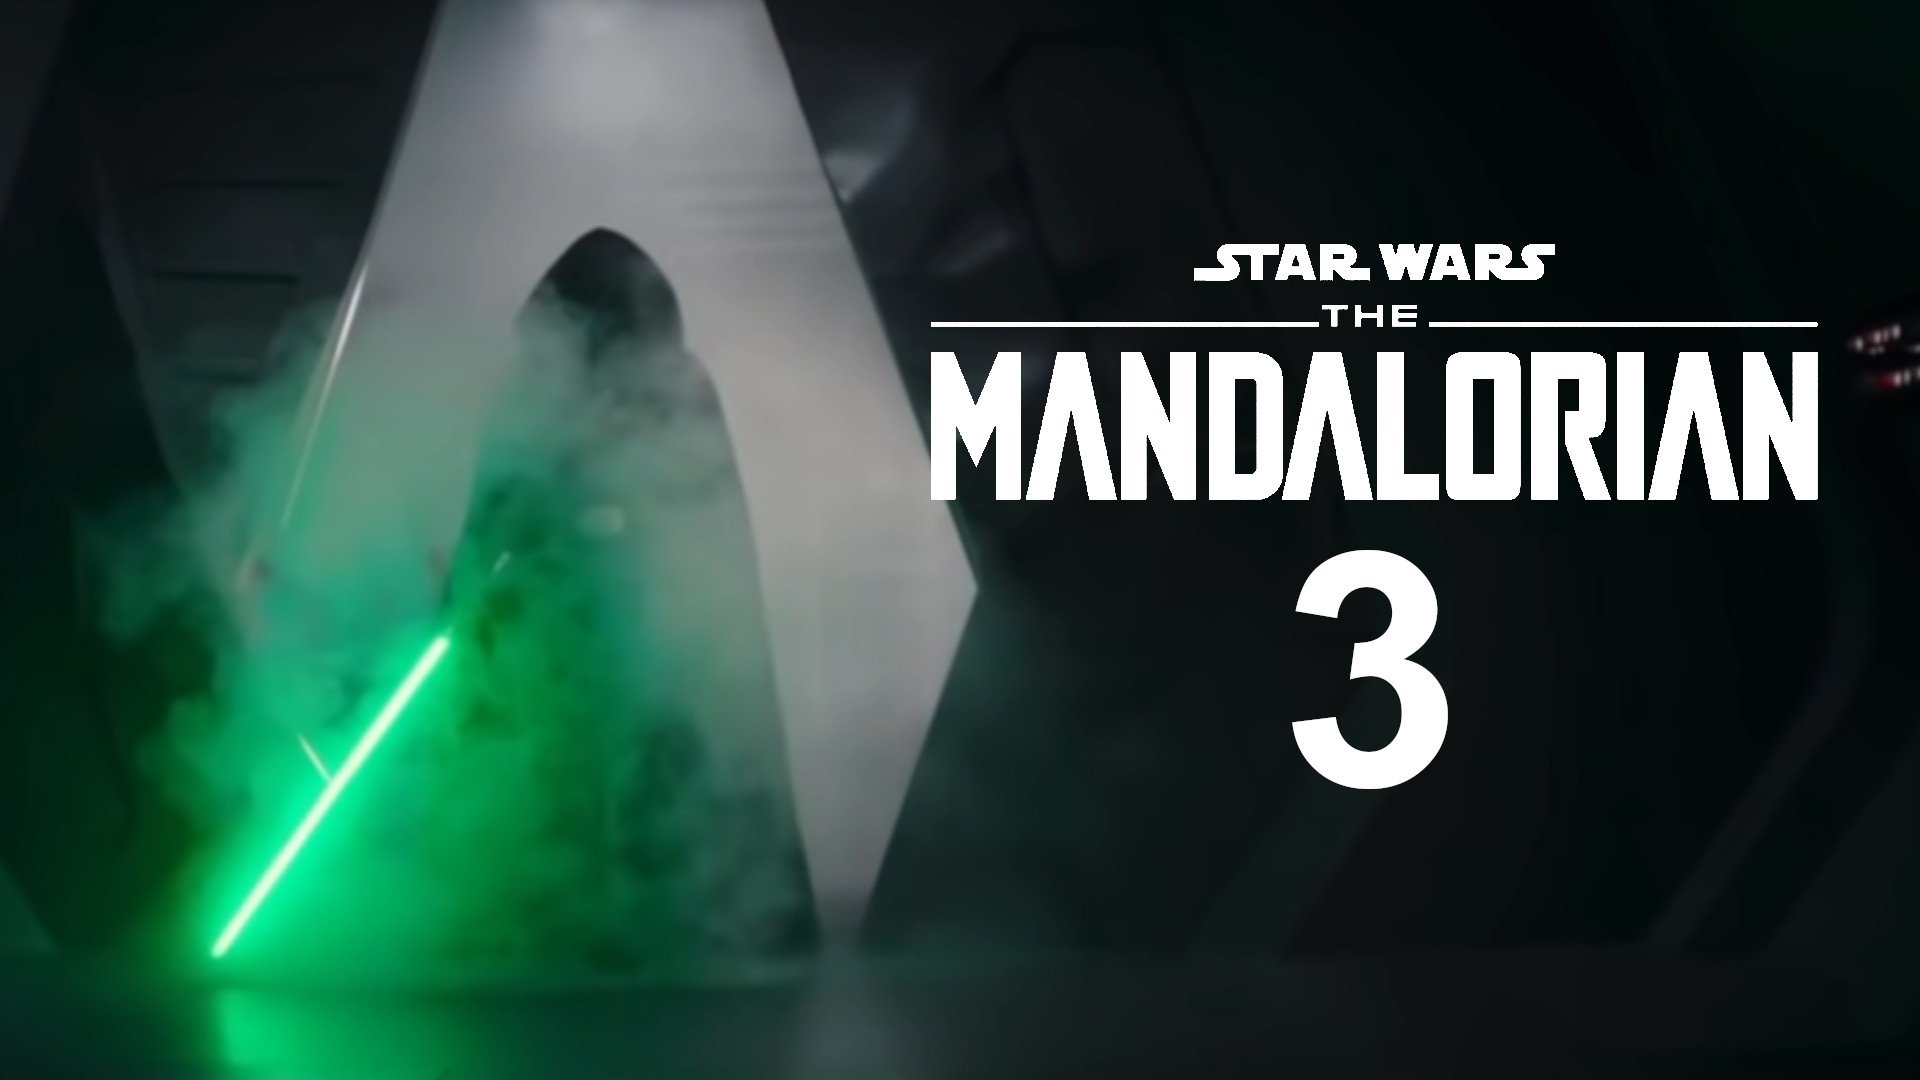 The Mandalorian kehrt zurück: Alle Infos zur 3. Staffel samt